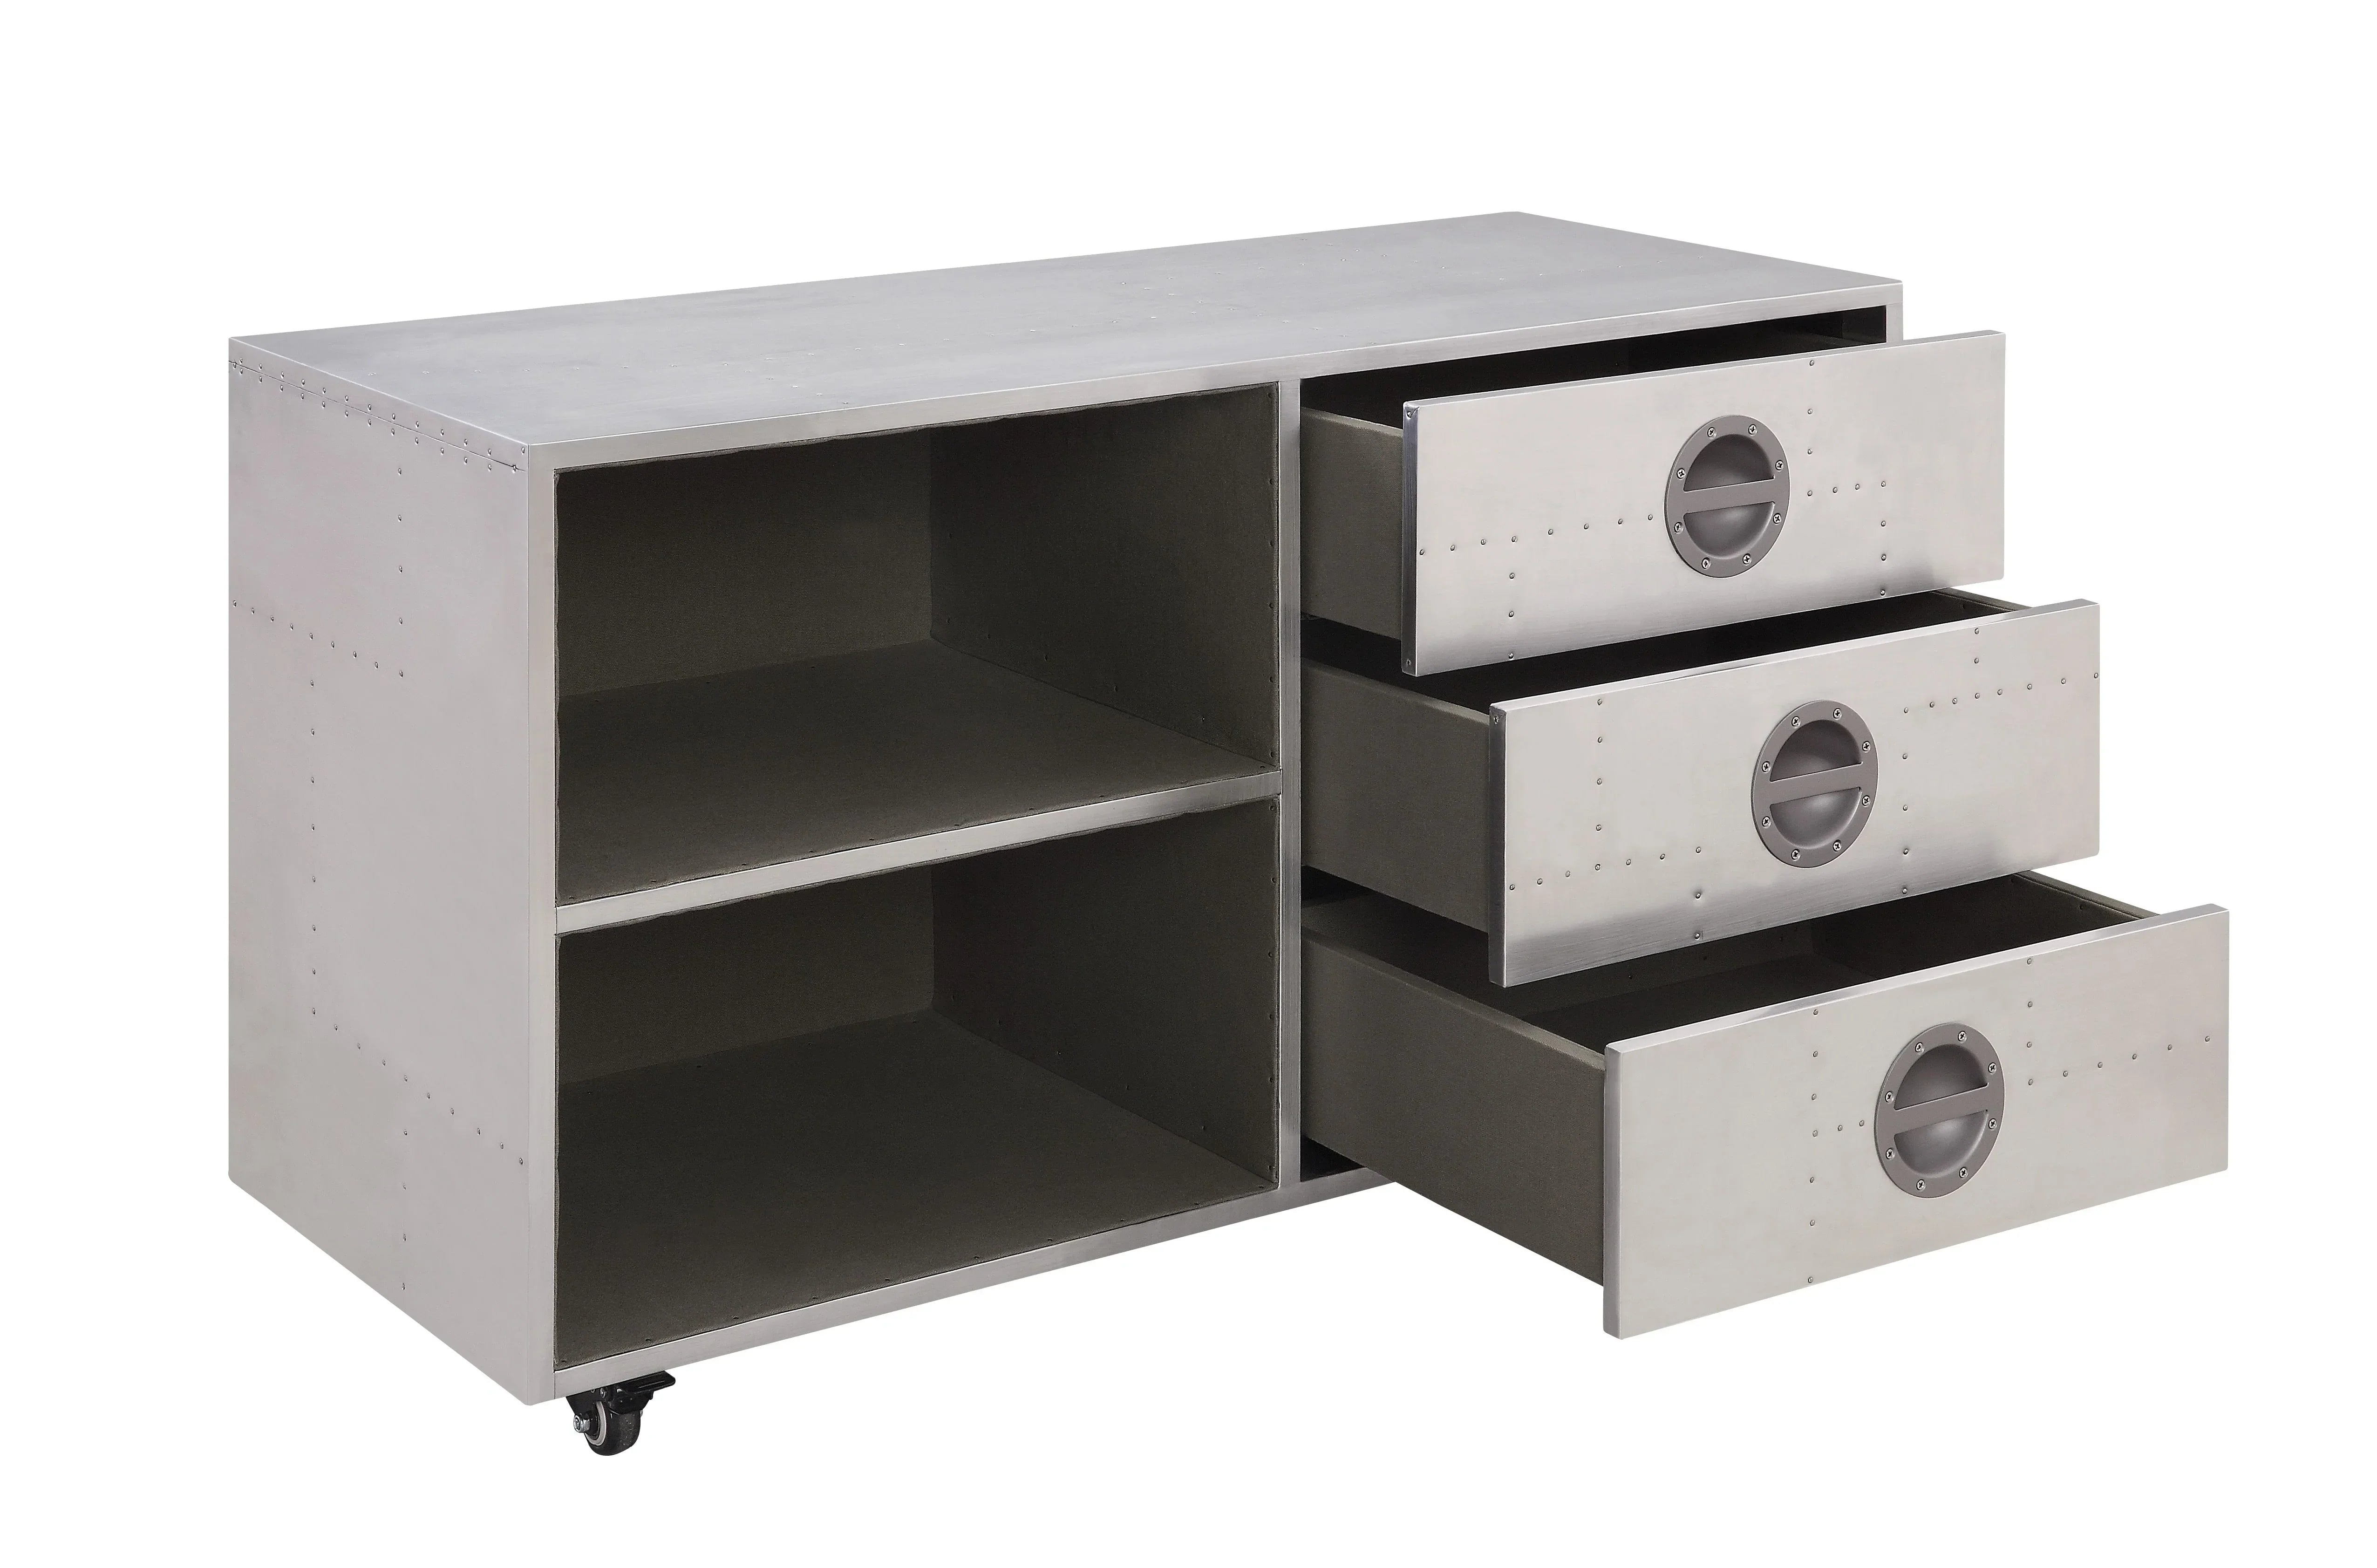 Brancaster Aluminum Cabinet Model 92427 By ACME Furniture